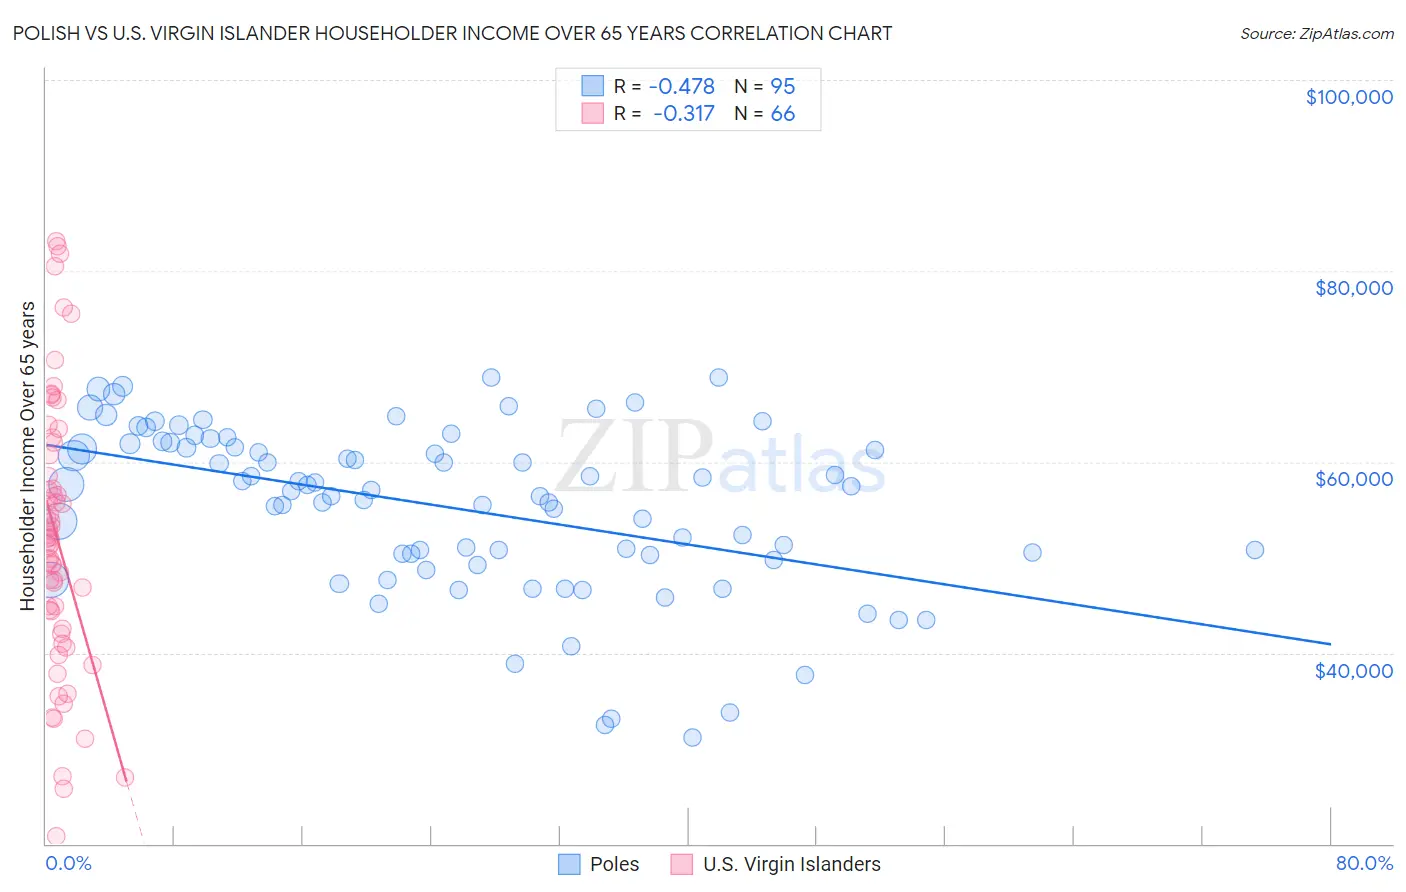 Polish vs U.S. Virgin Islander Householder Income Over 65 years